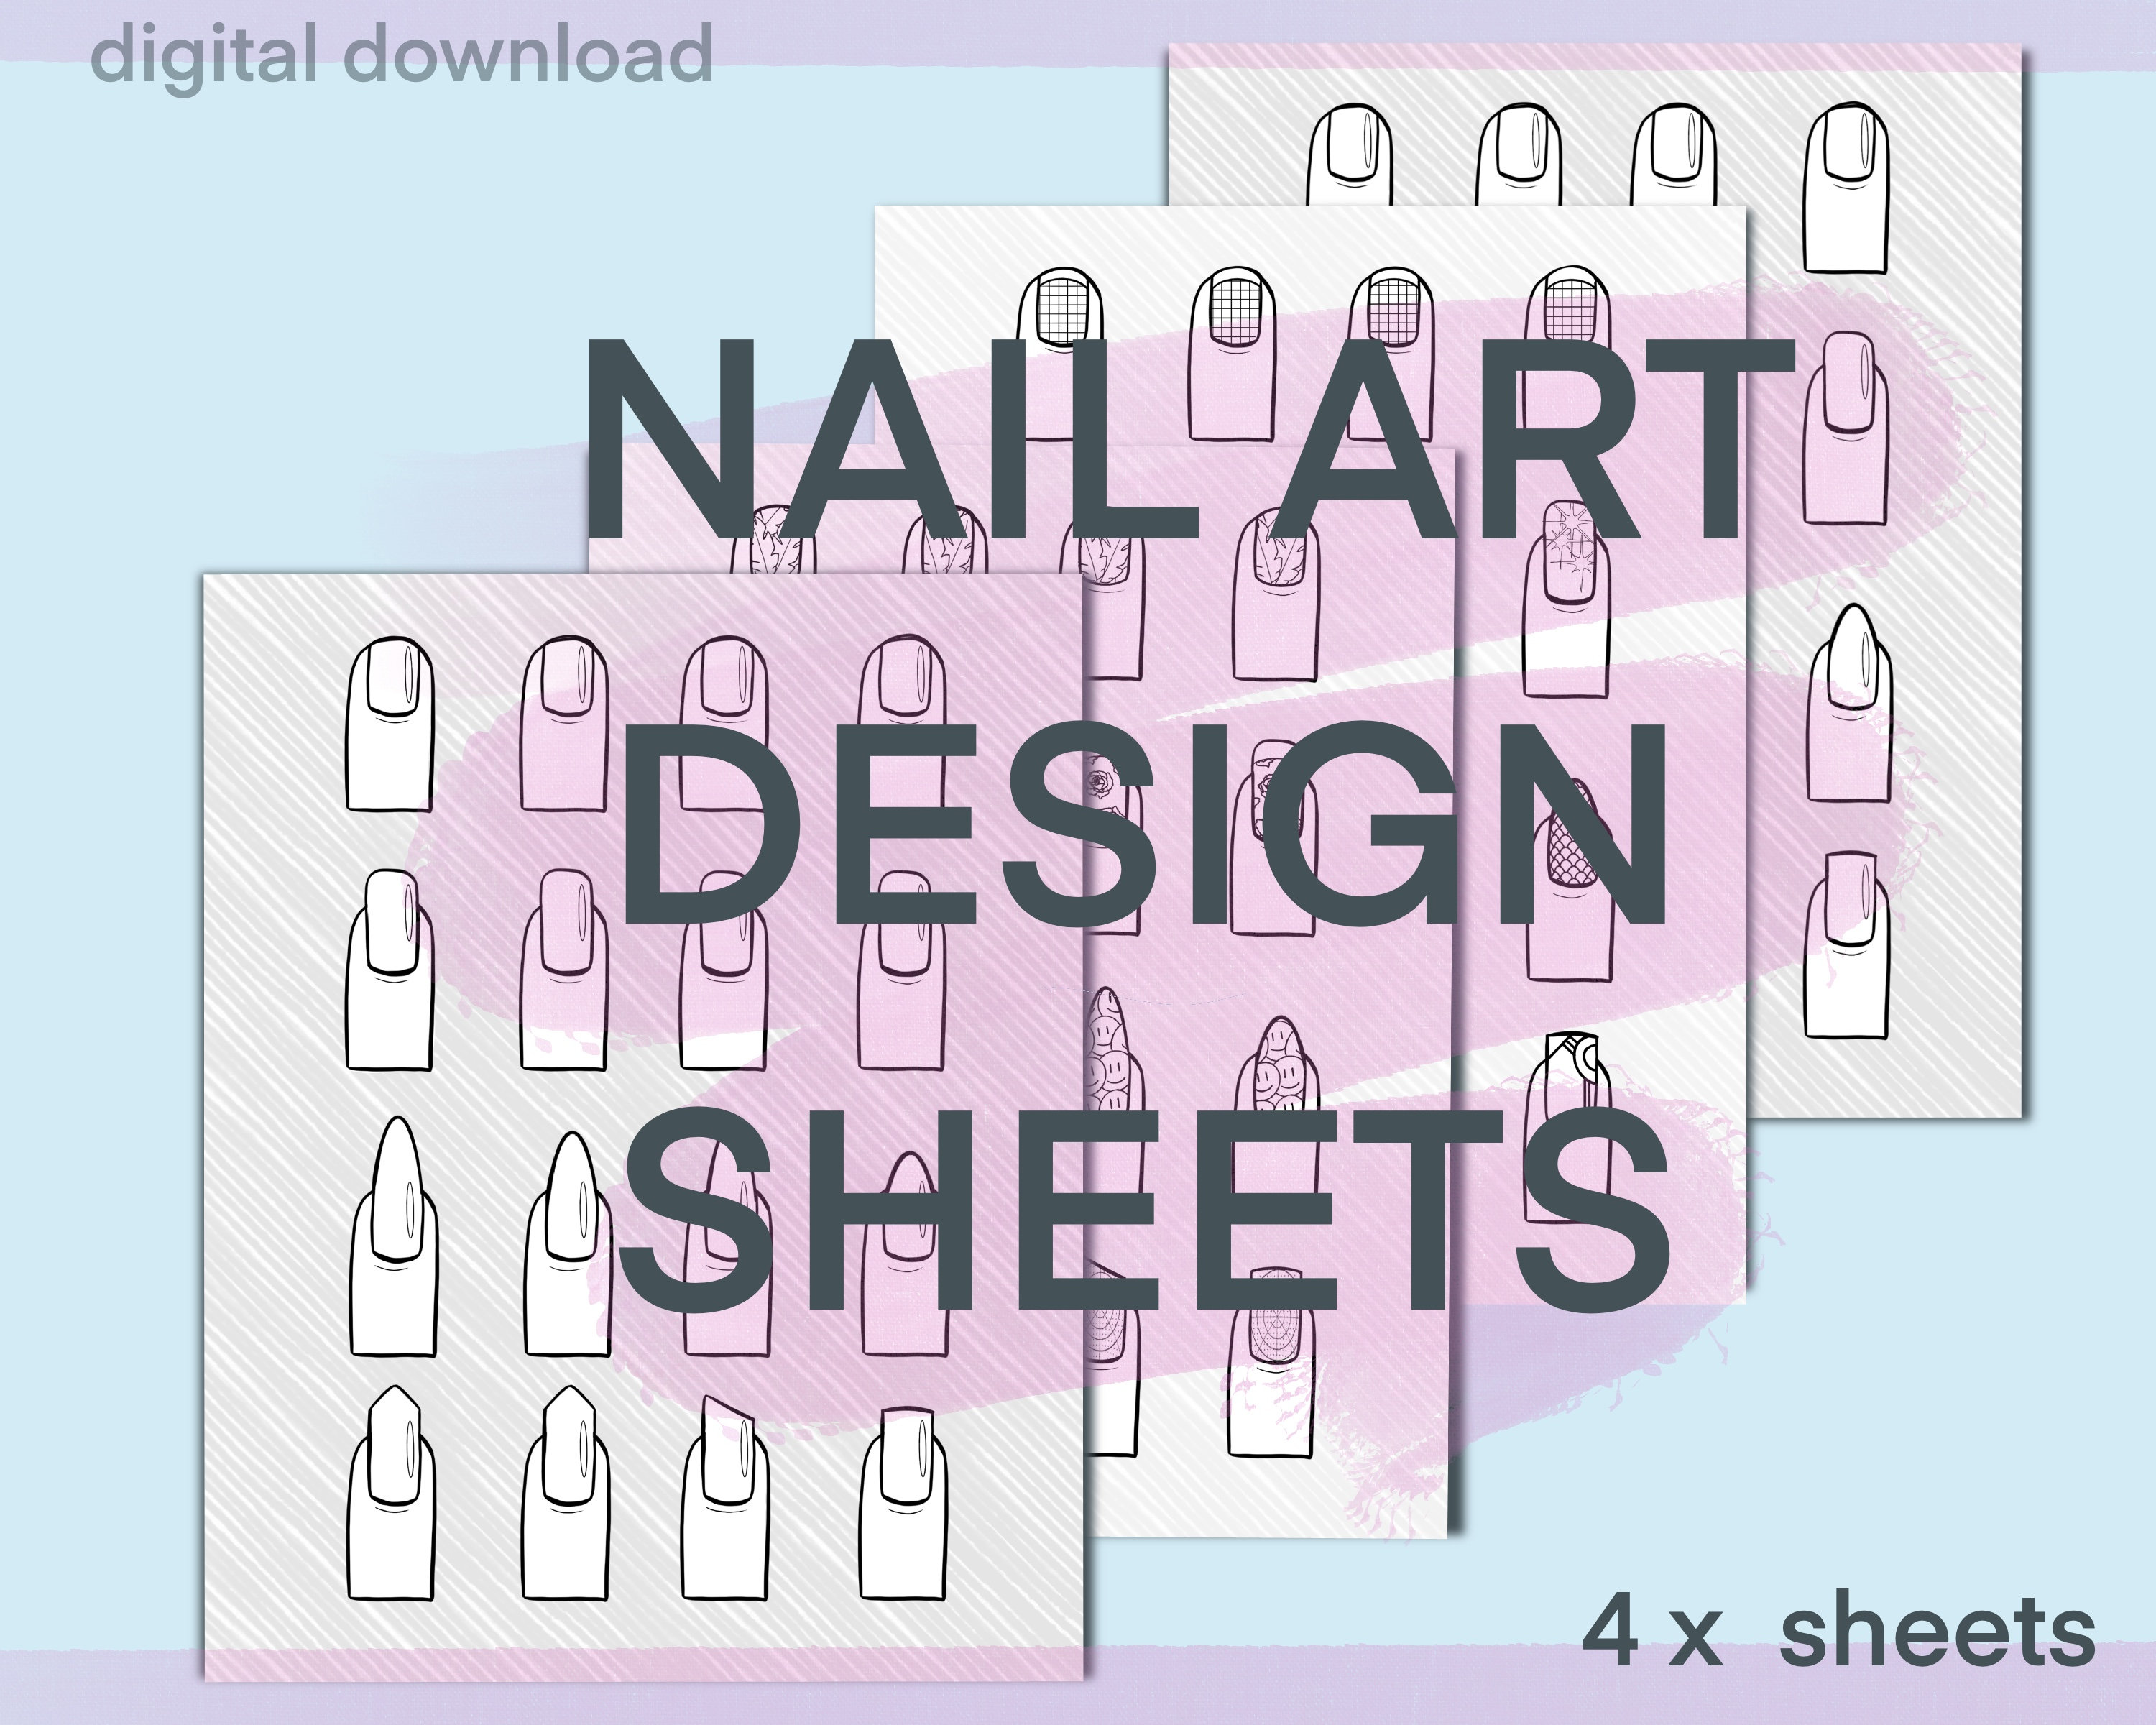 9. Nail Art Design Practice Templates - Michaels.com - wide 4